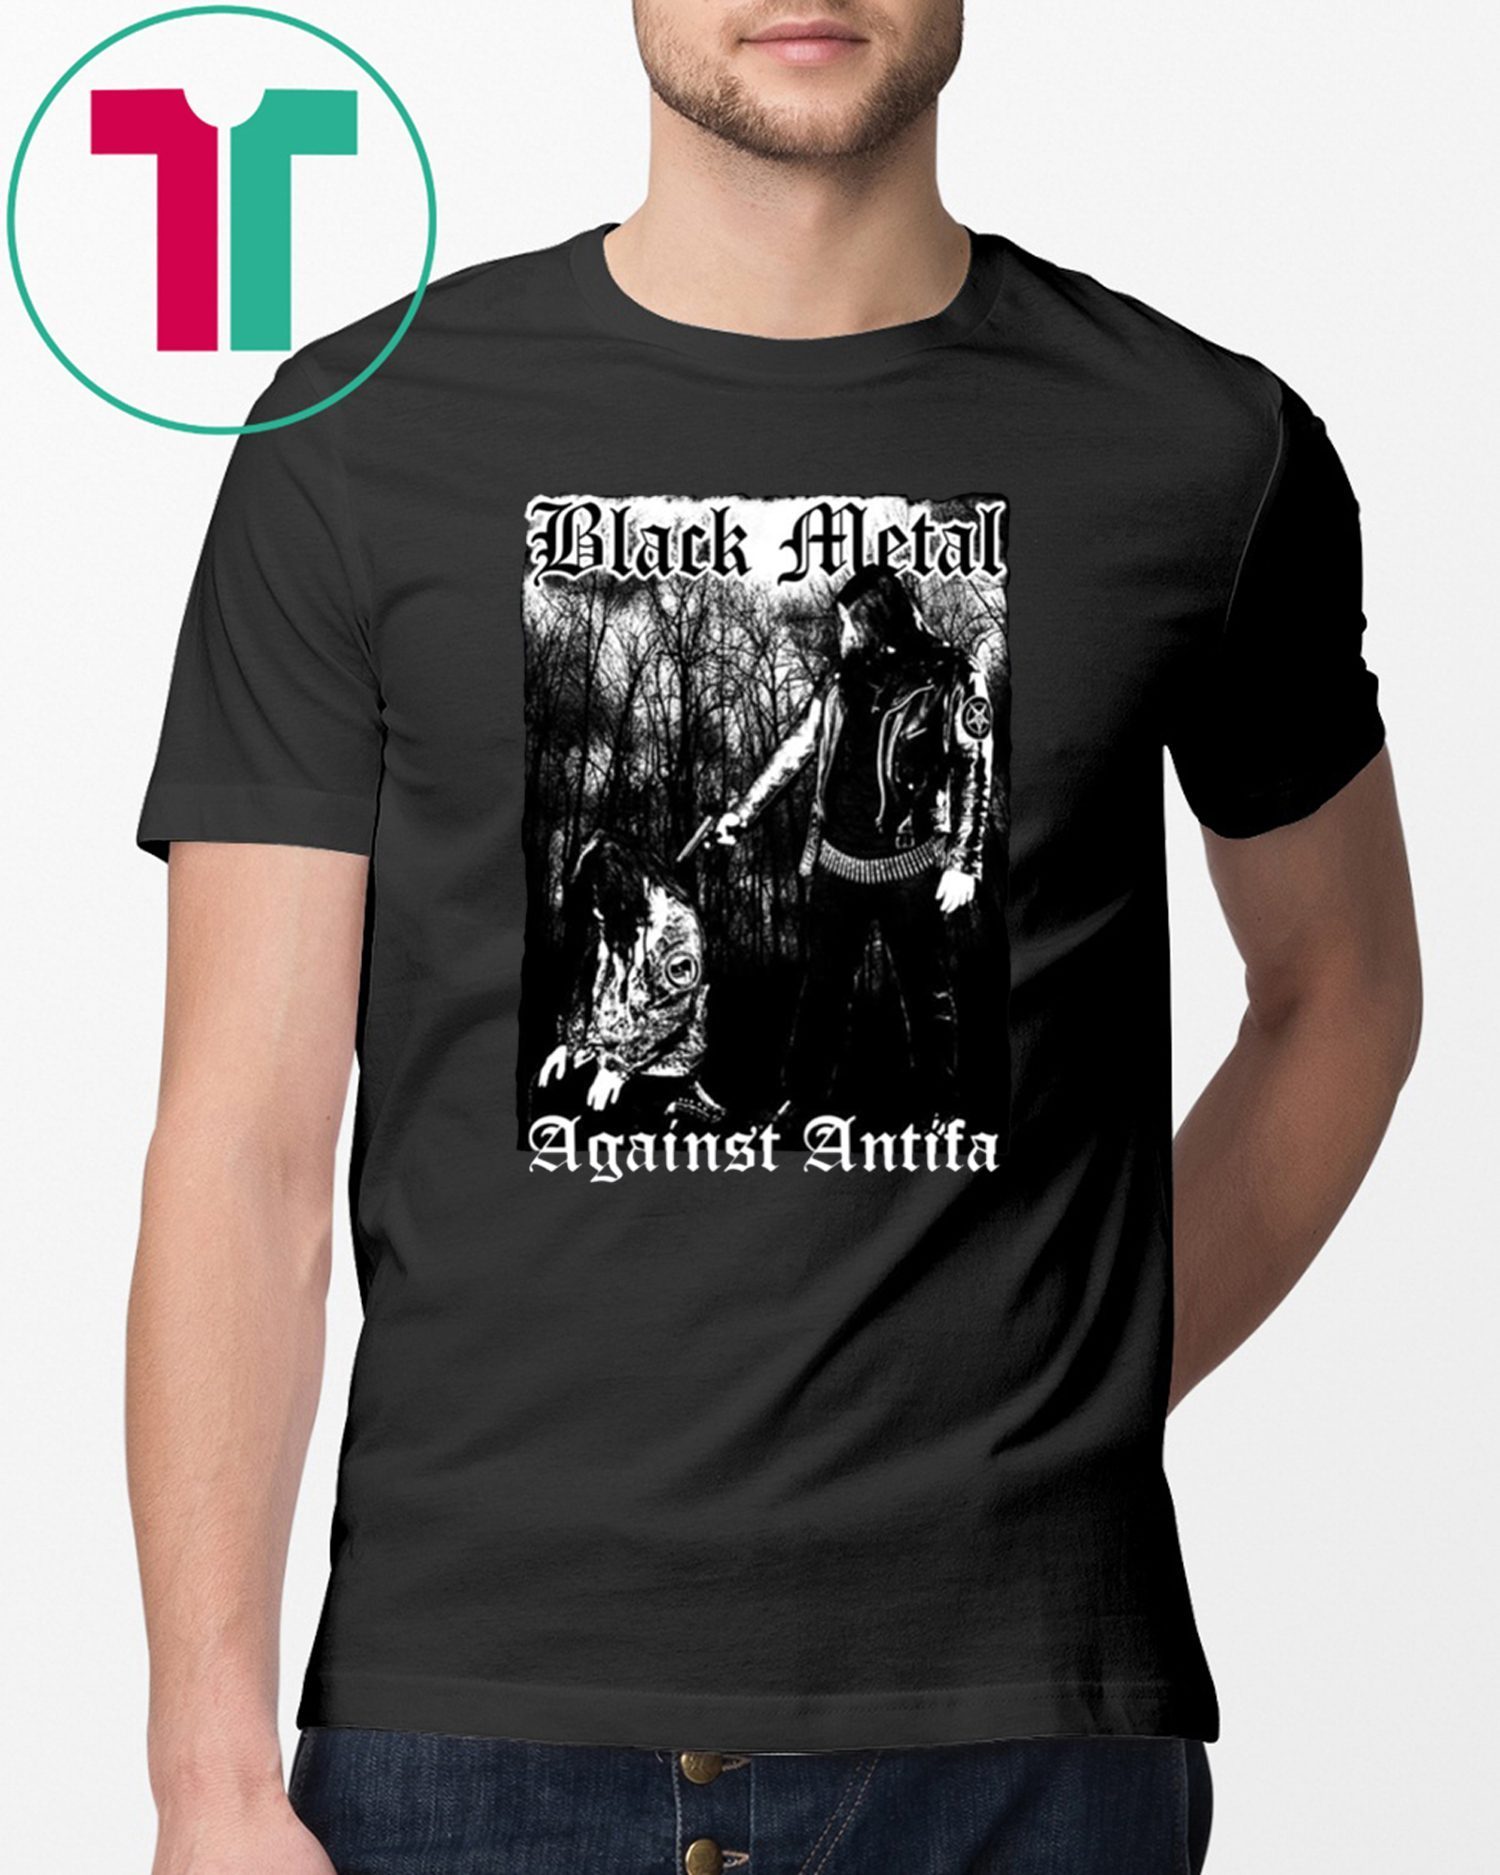 ‘Black Metal Against Antifa’ Behemoth’s Nergal Reveals 2019 Tee Shirt